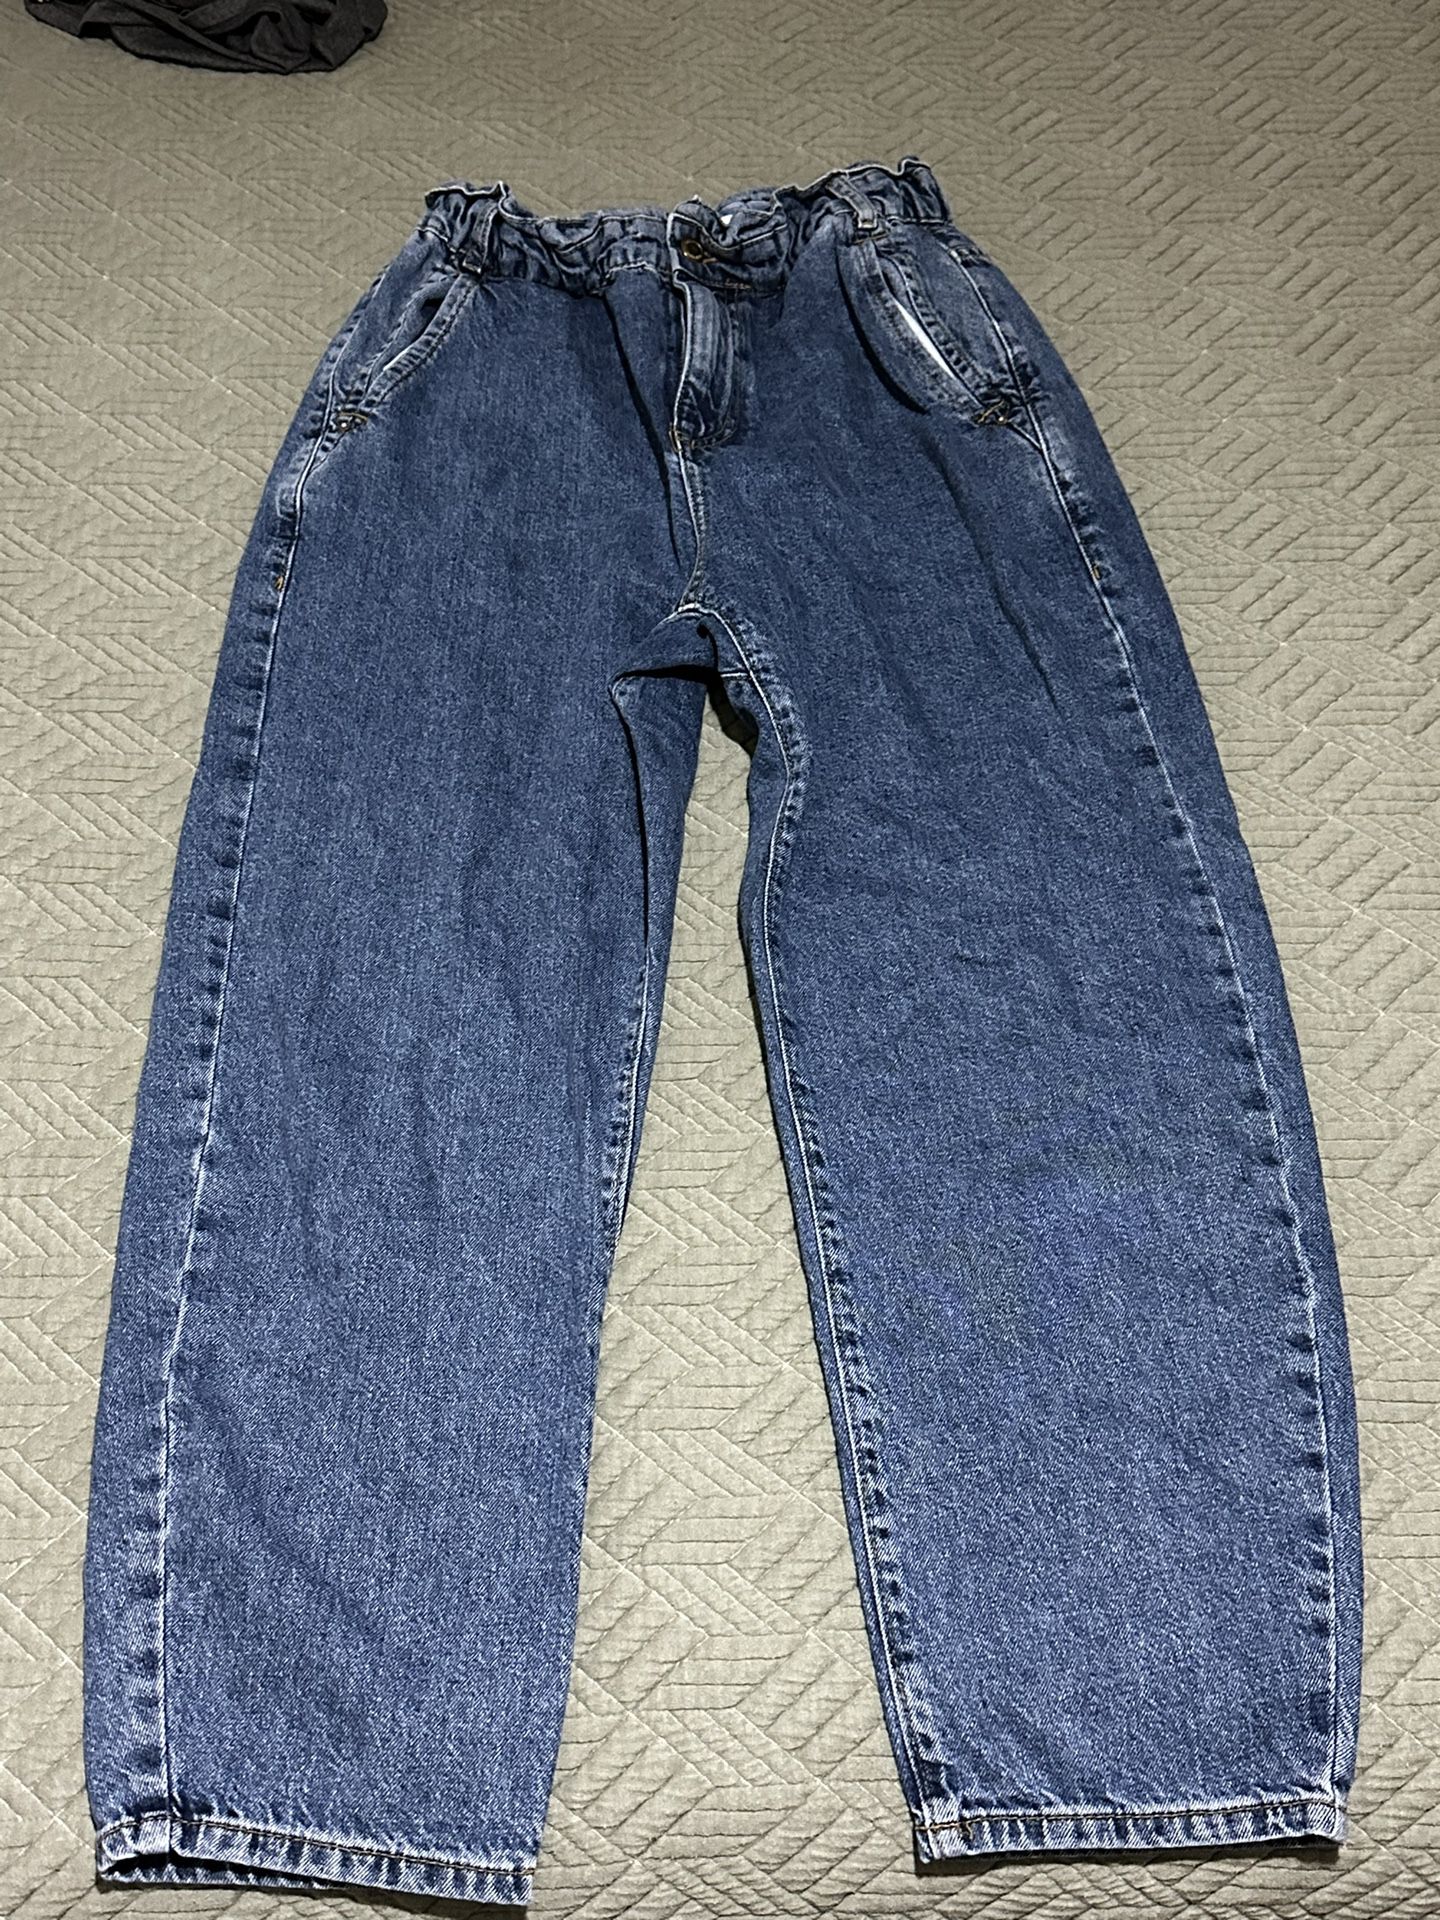 Pantalón De Mujer / Woman’s Jeans